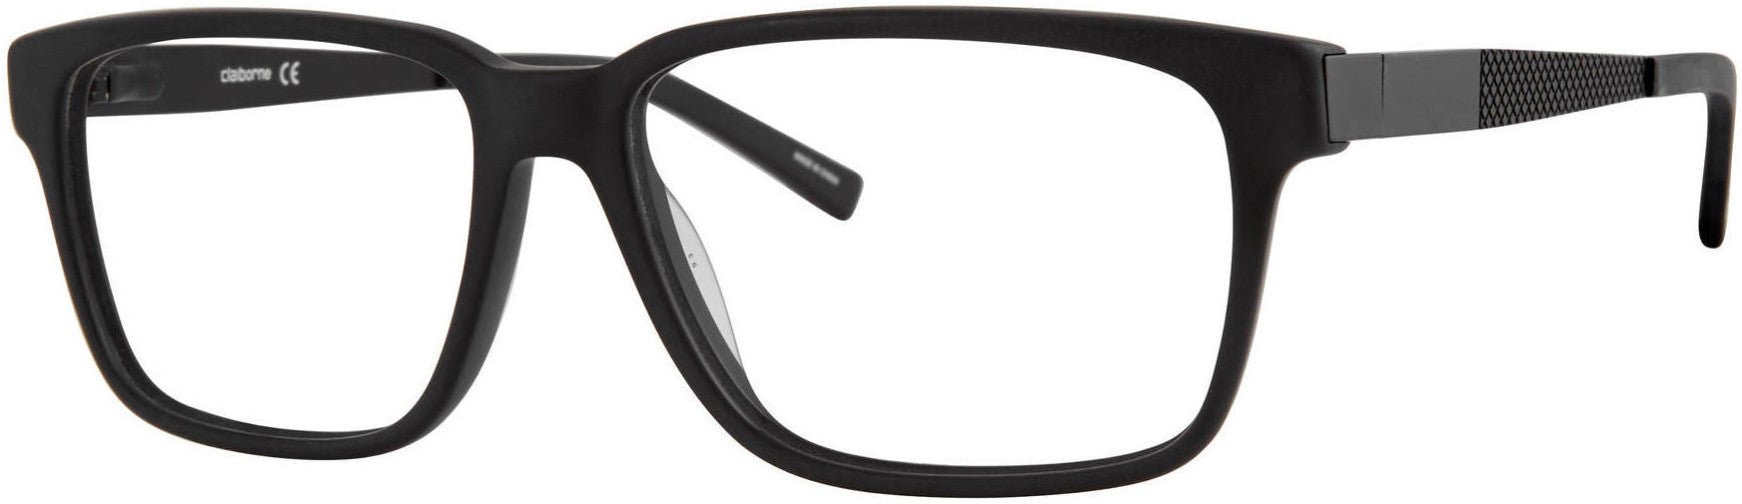  Claiborne 248 Rectangular Eyeglasses 0003-0003  Matte Black (00 Demo Lens)